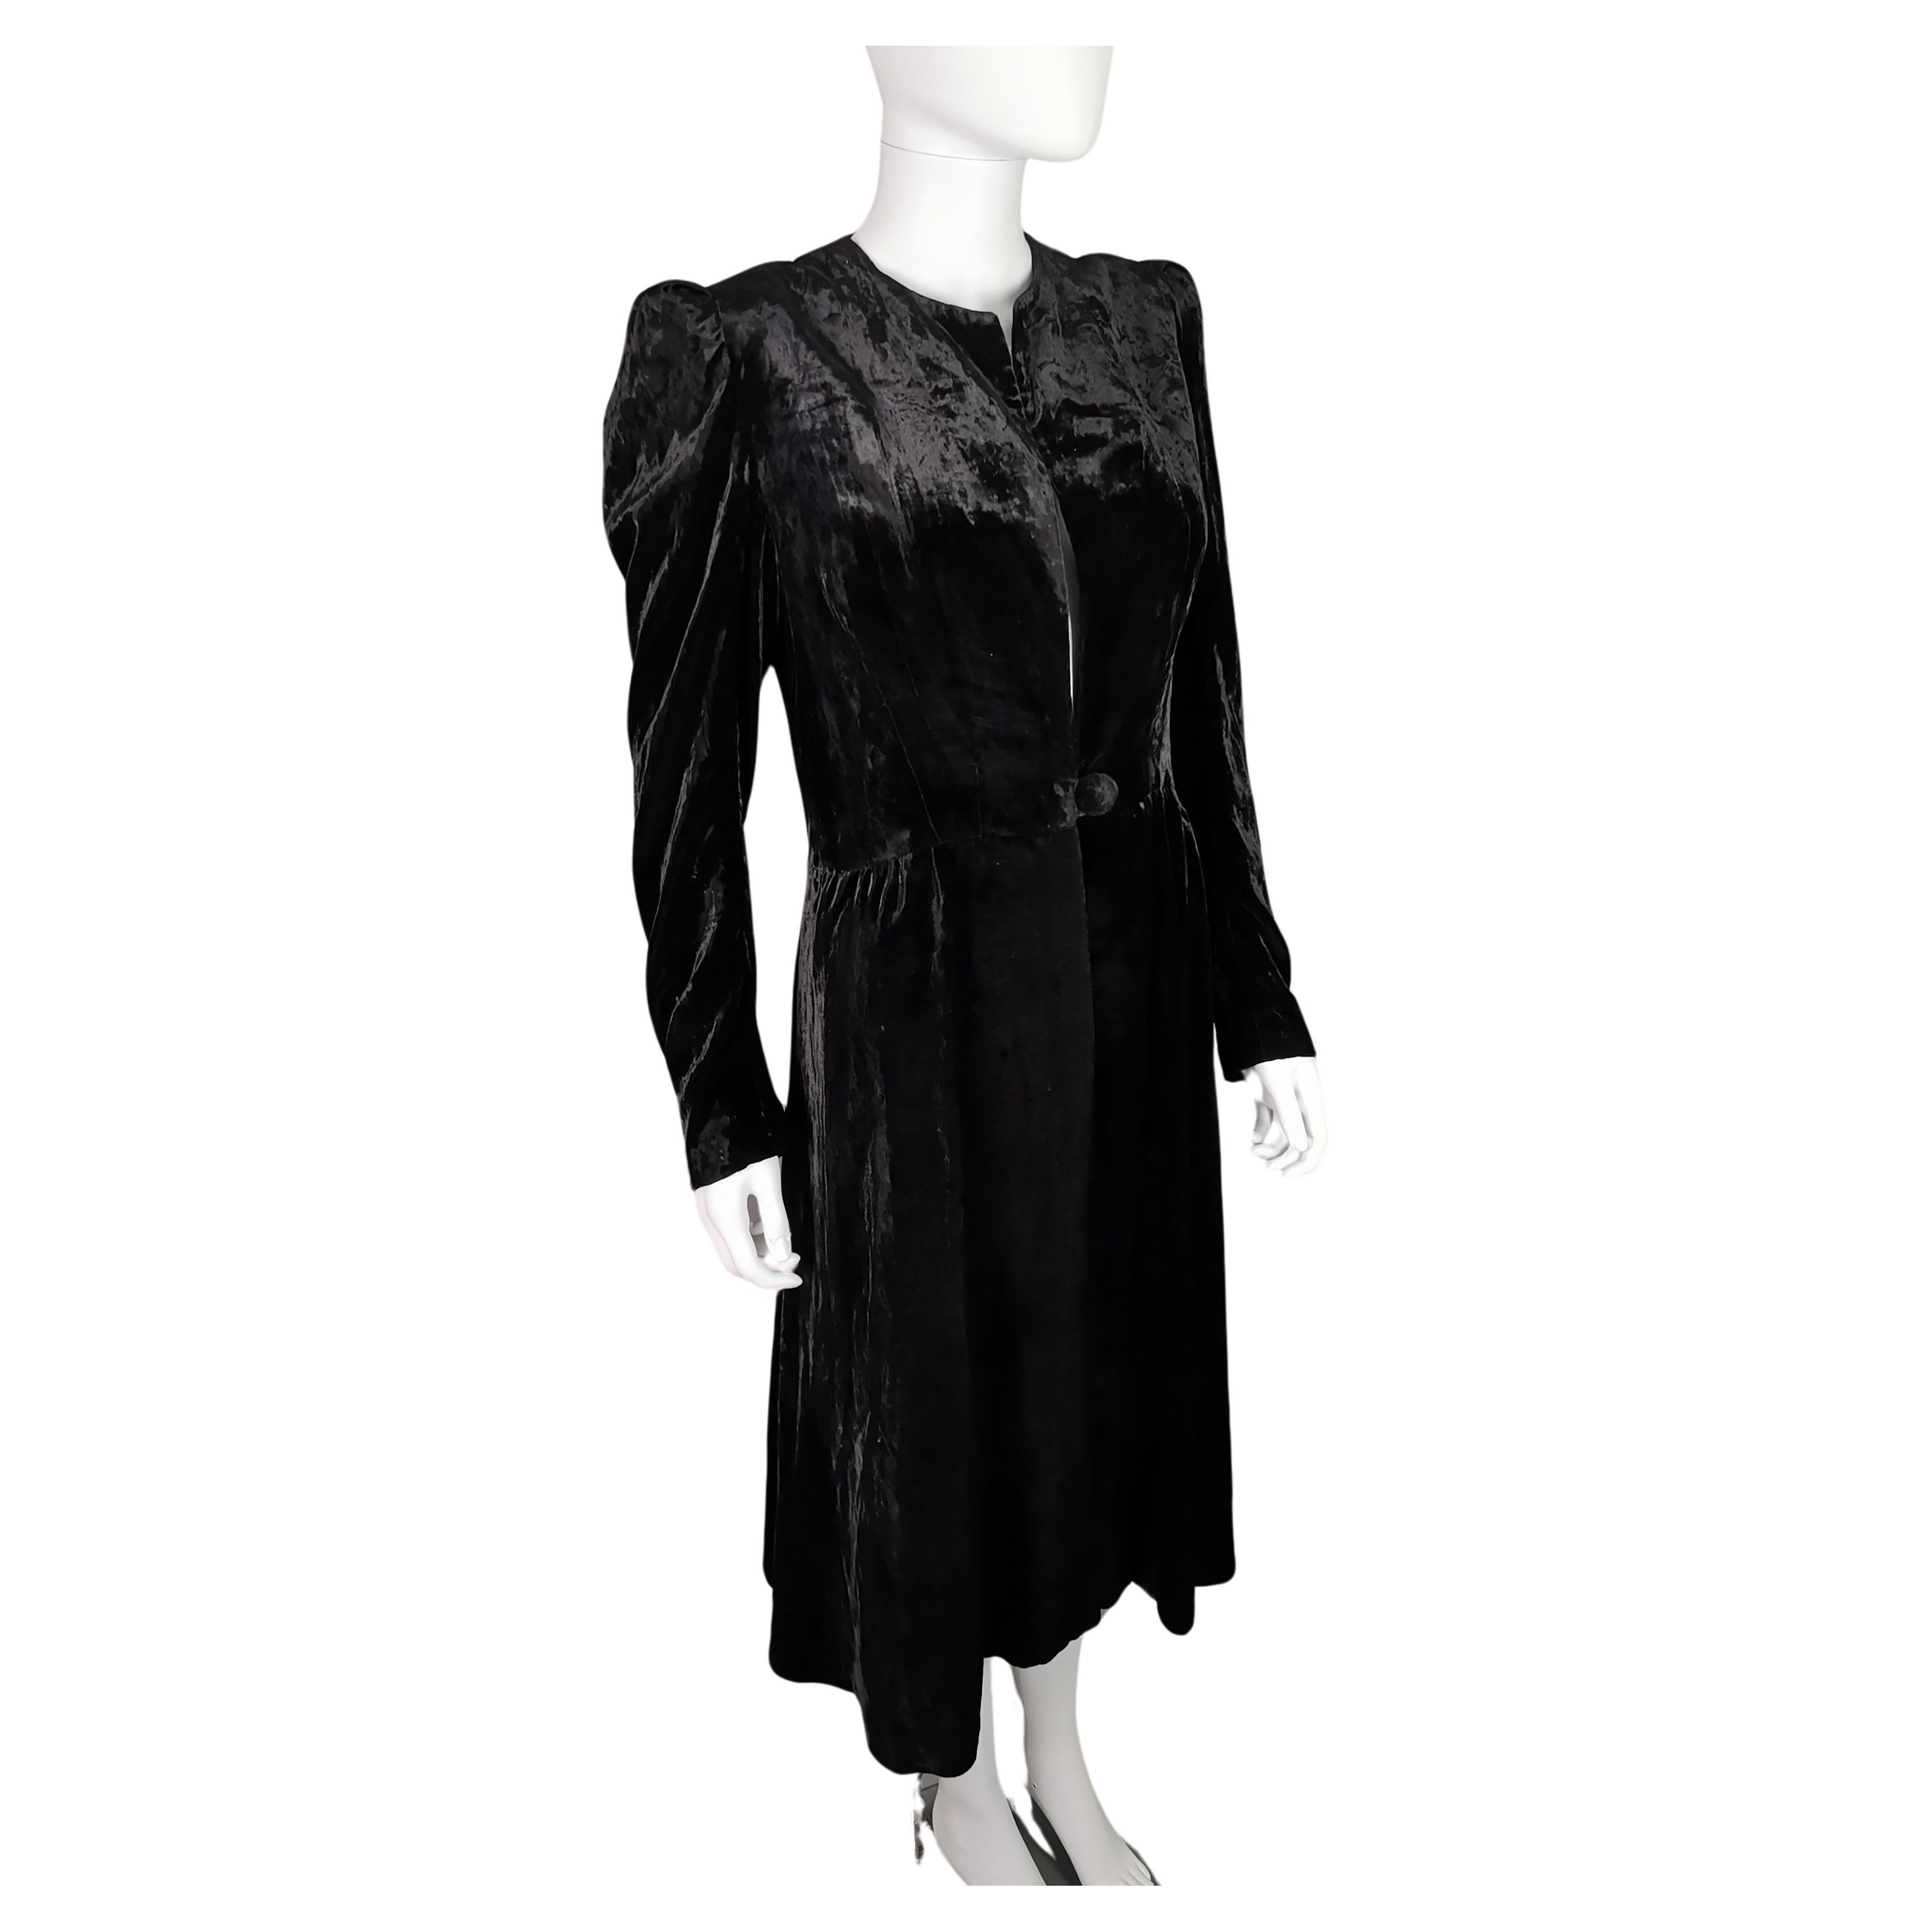 Vintage Art Deco black velvet opera coat, jacket, 1930s